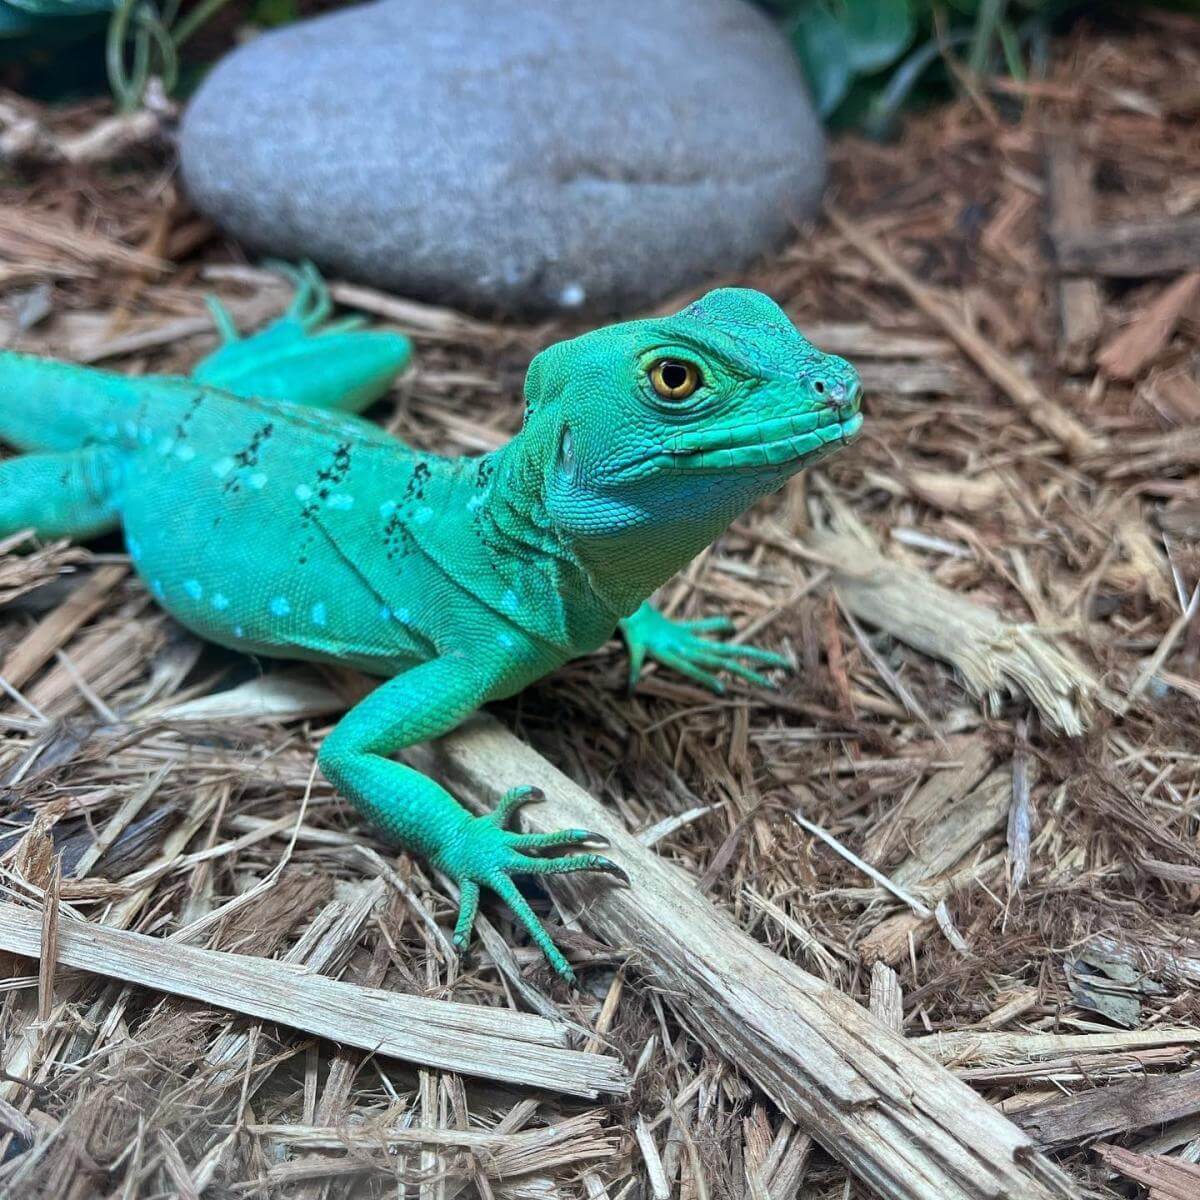 Green lizard at Sandoway Discovery Center